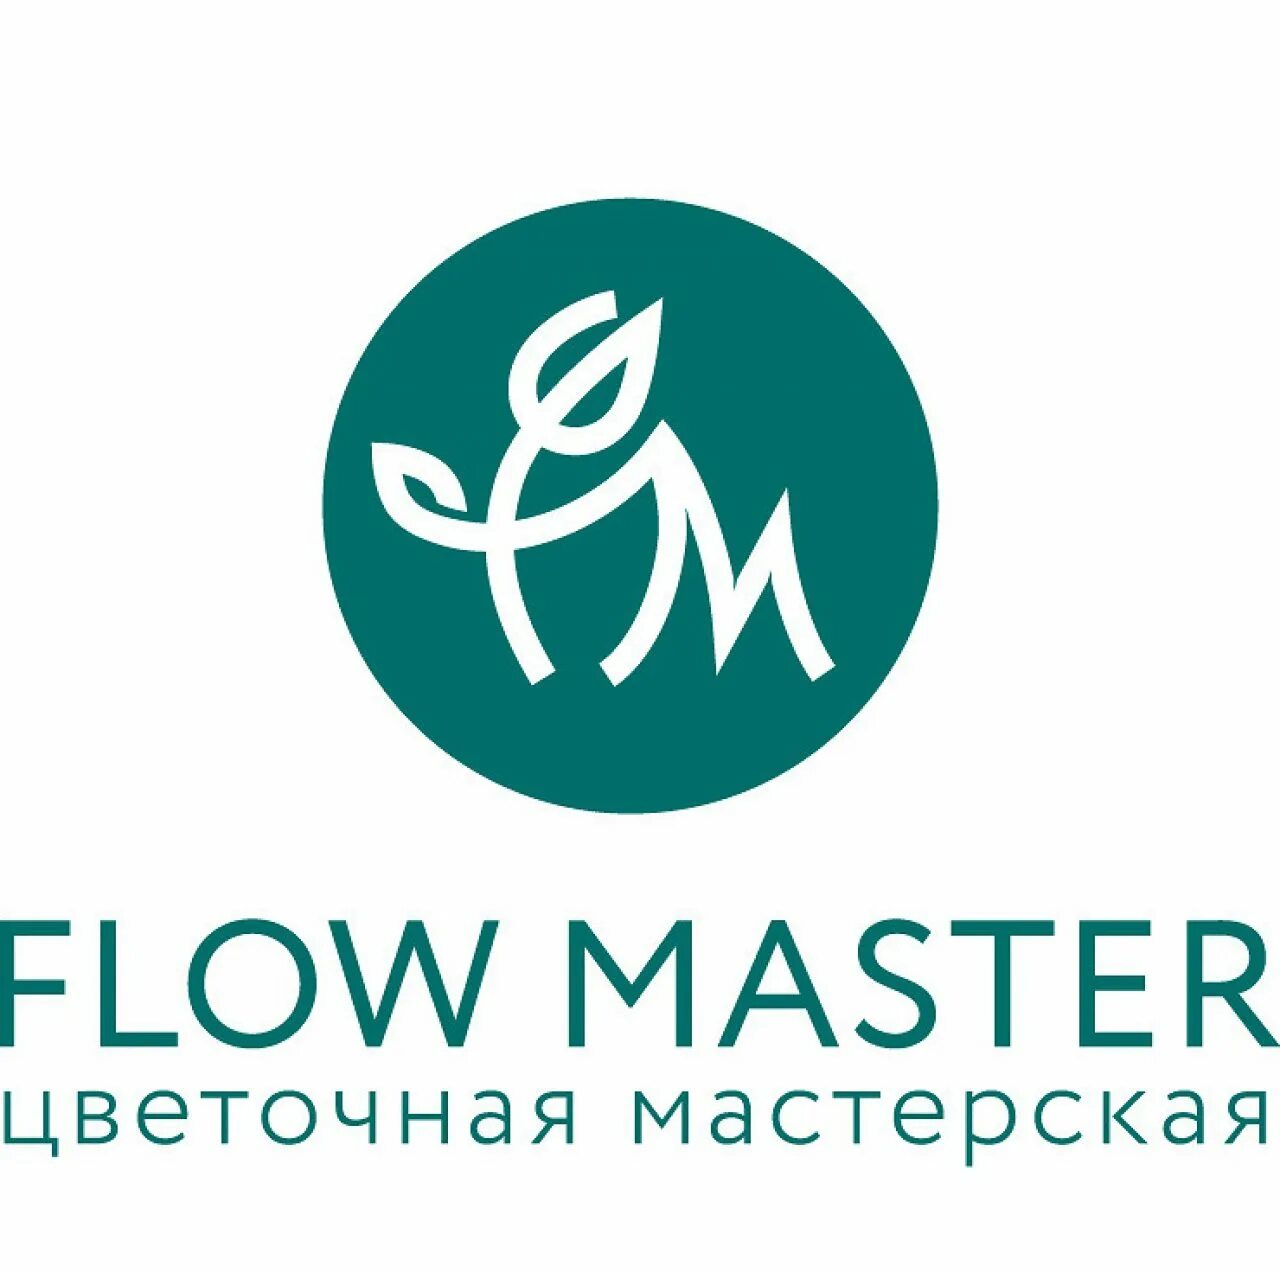 Ооо мастер г. ООО мастер. ООО Мастерс. Логотип Flo Master. Компания Flow.